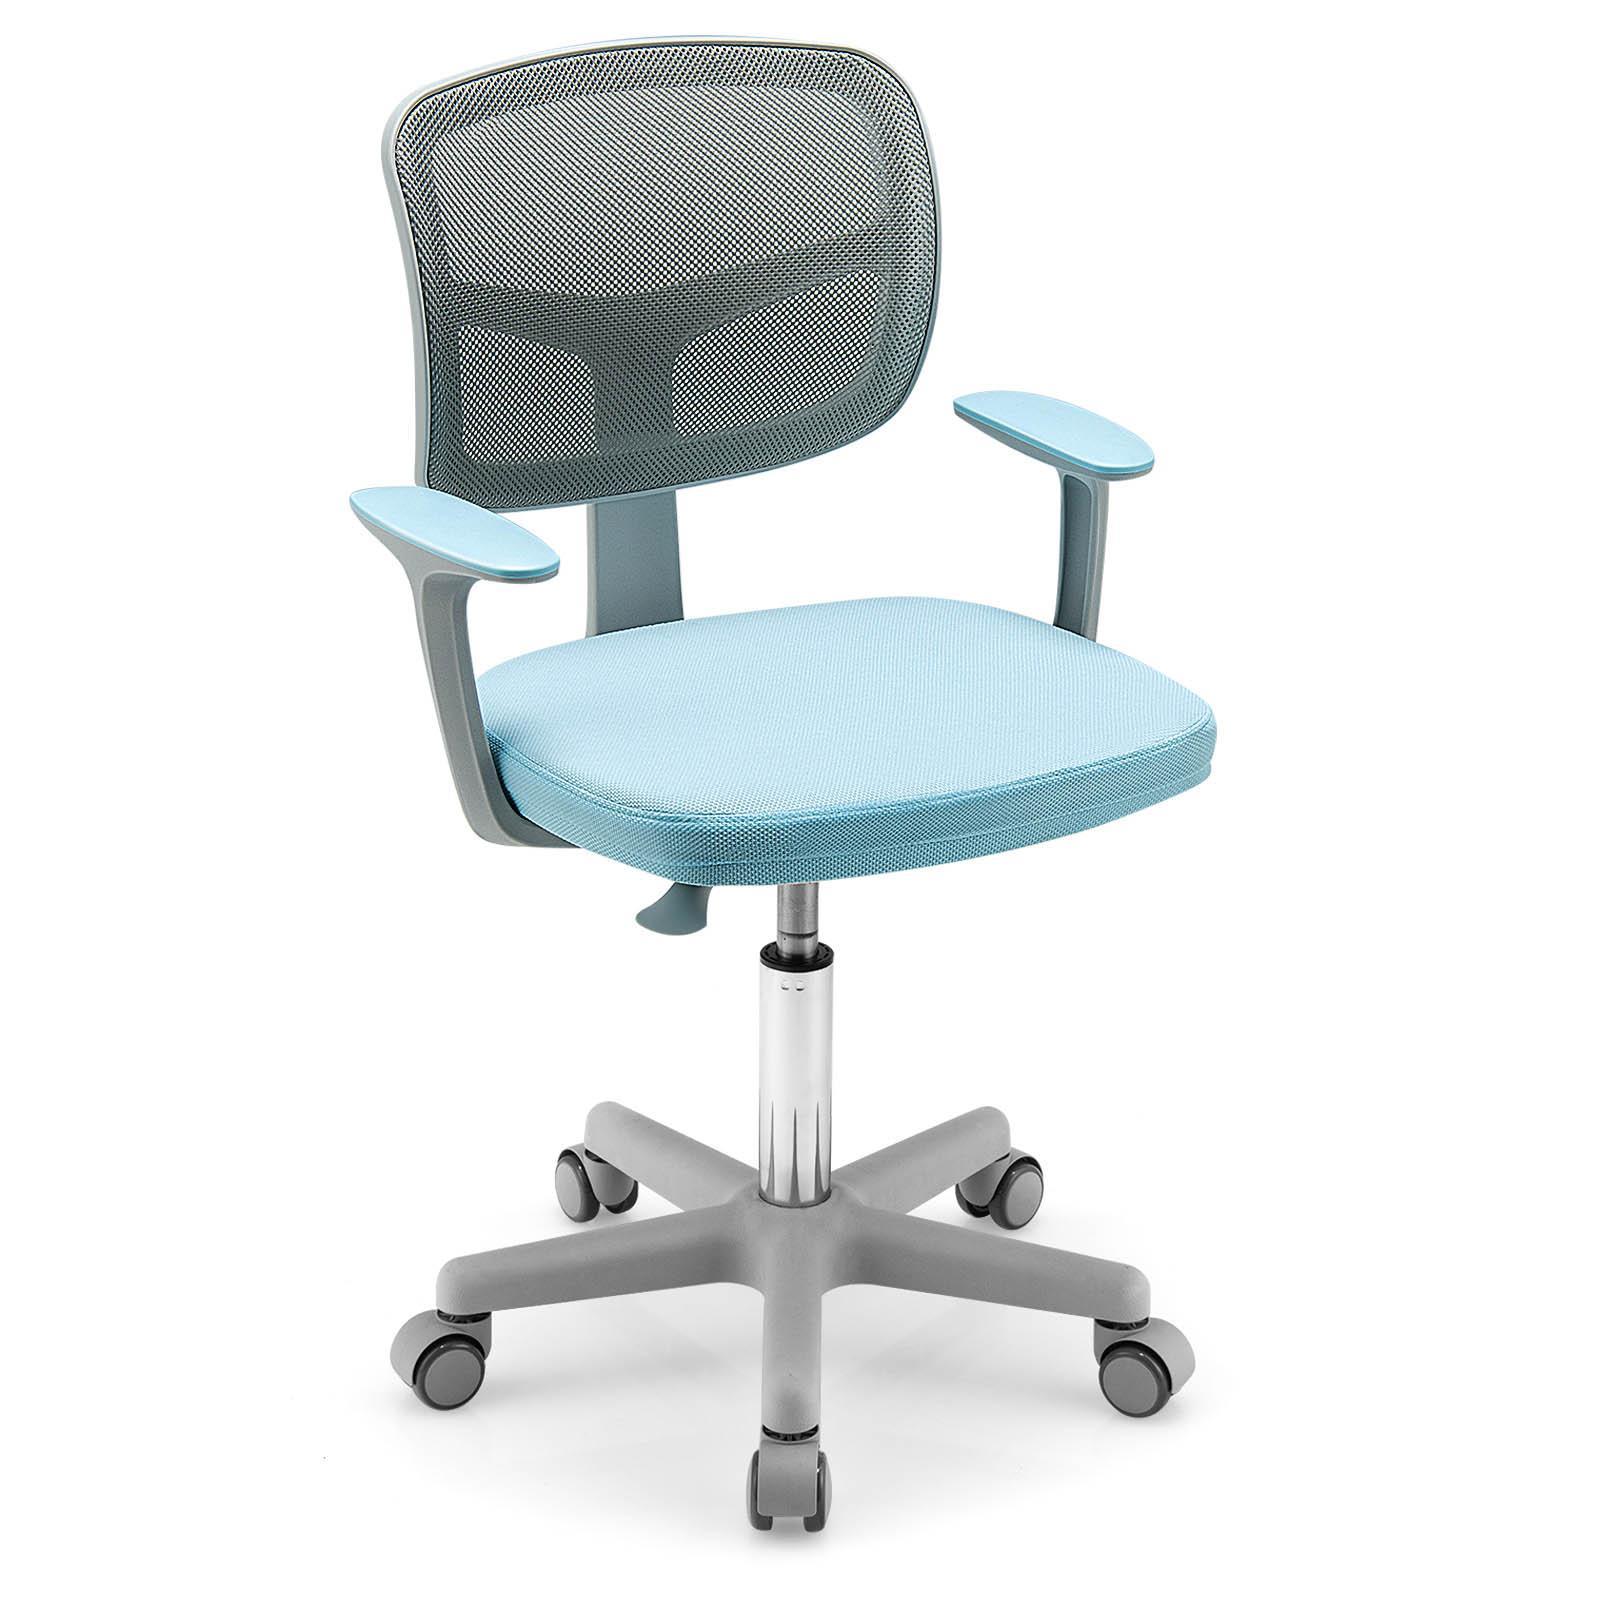 Giantex Kids Desk Study Chair Children Computer Chair w/Adjustable Height & Wheels Swivel Mesh Chair Blue